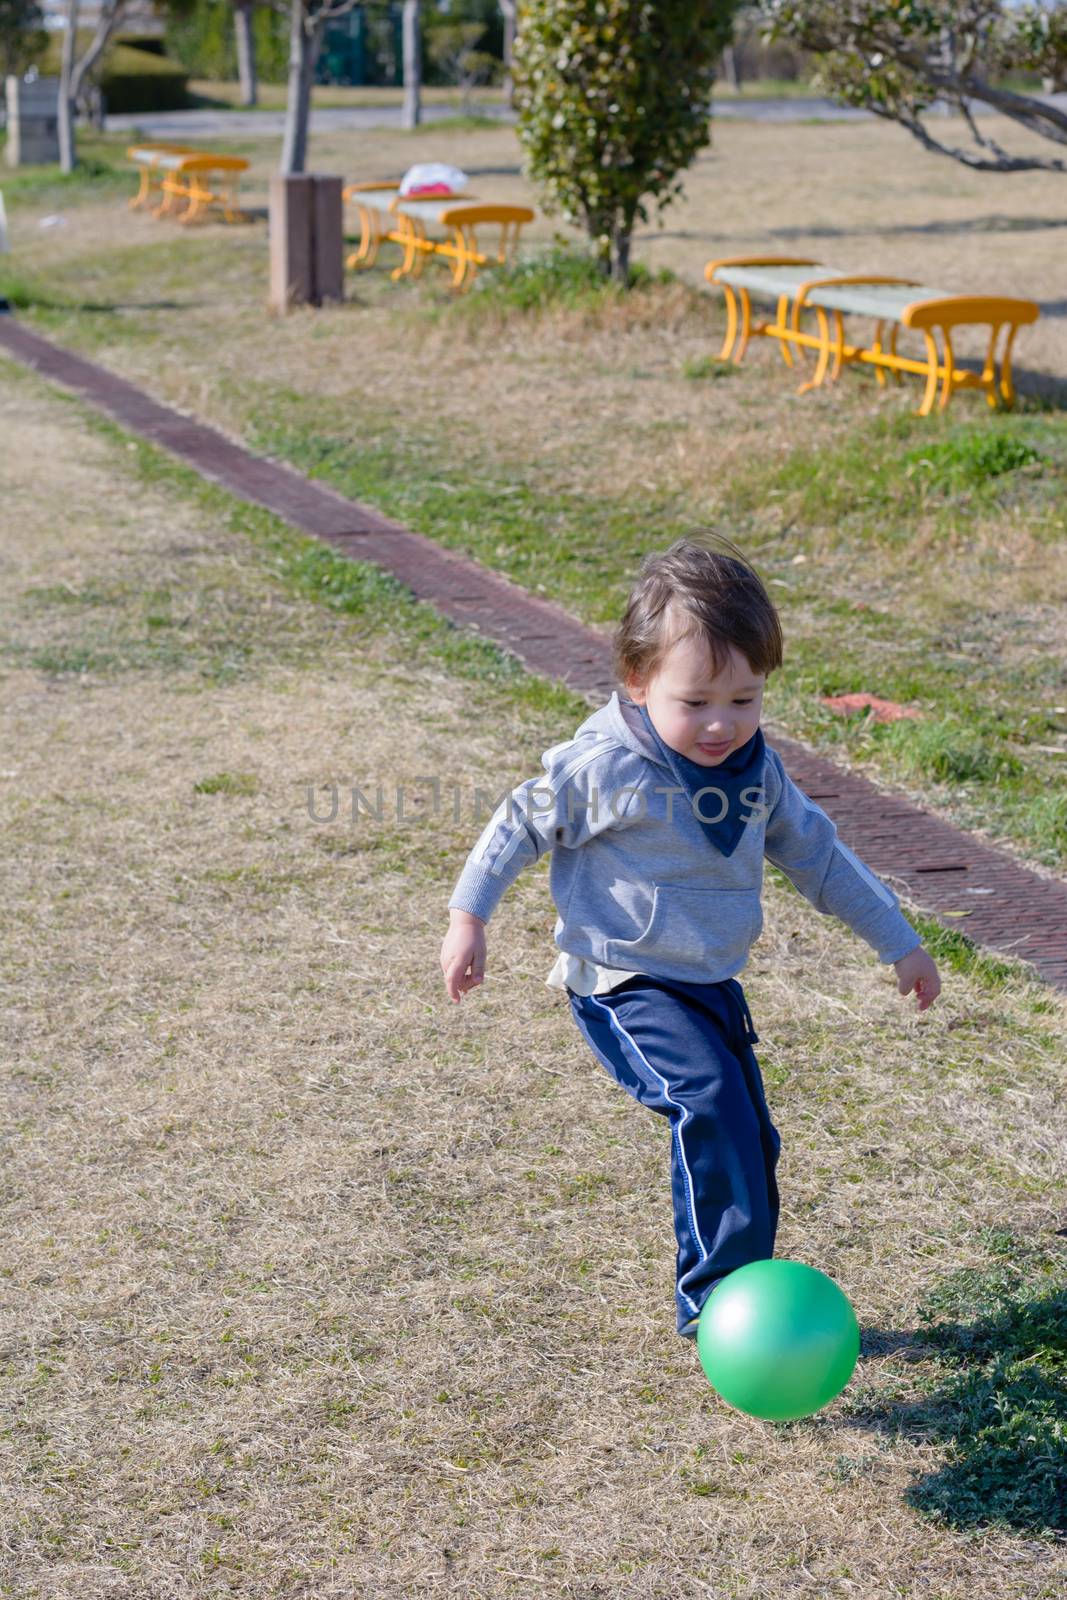 Boy Kicking Ball at Park by justtscott